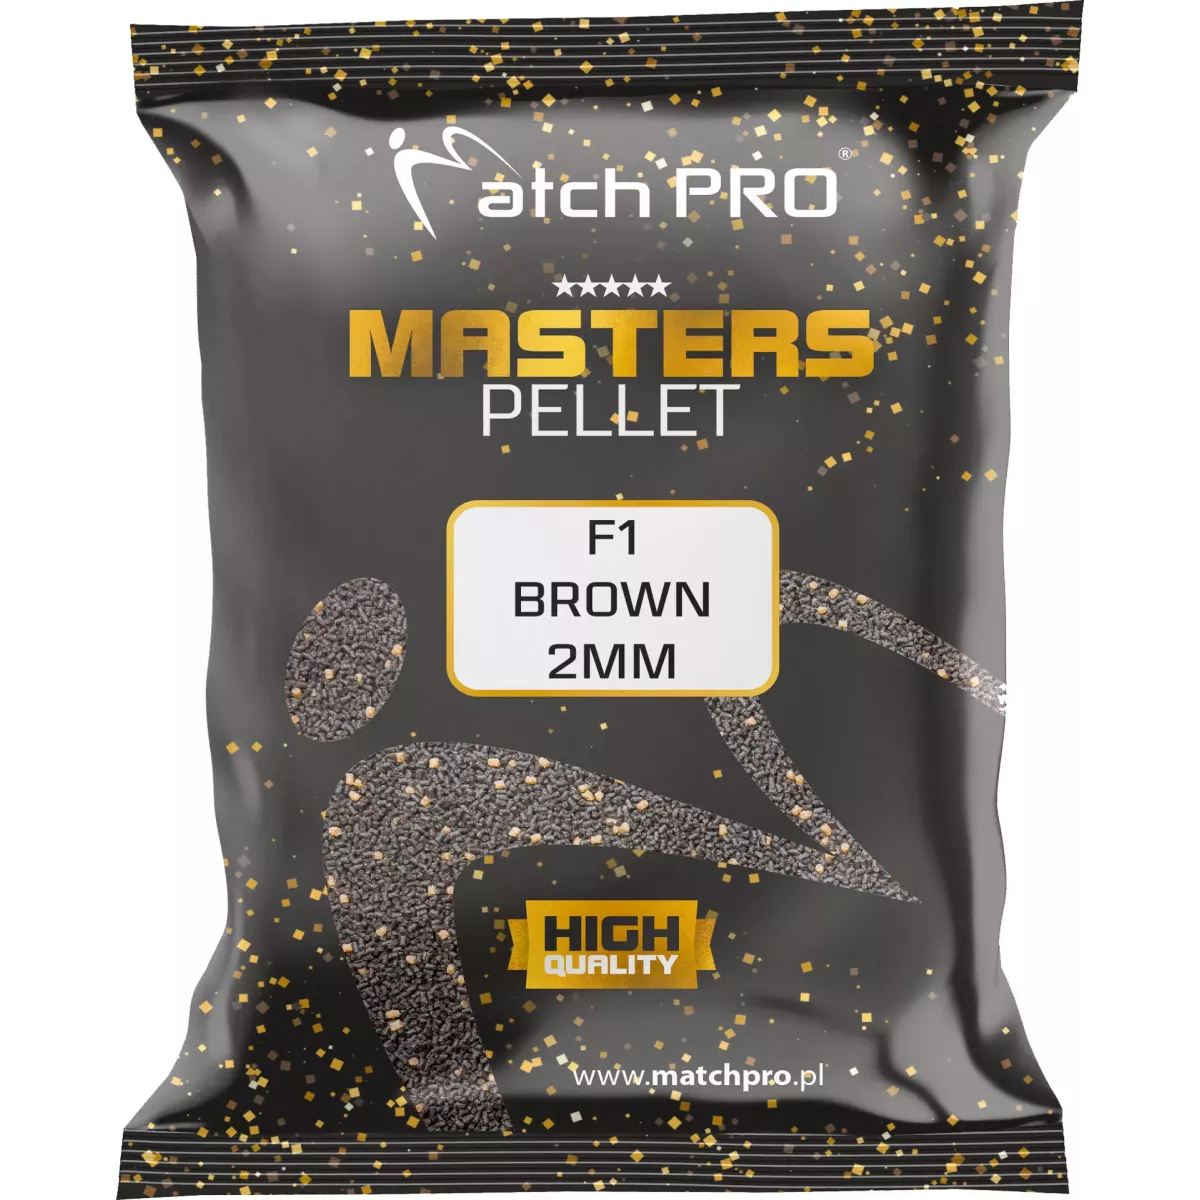 Pellet MatchPro Masters 2mm - F1 BROWN